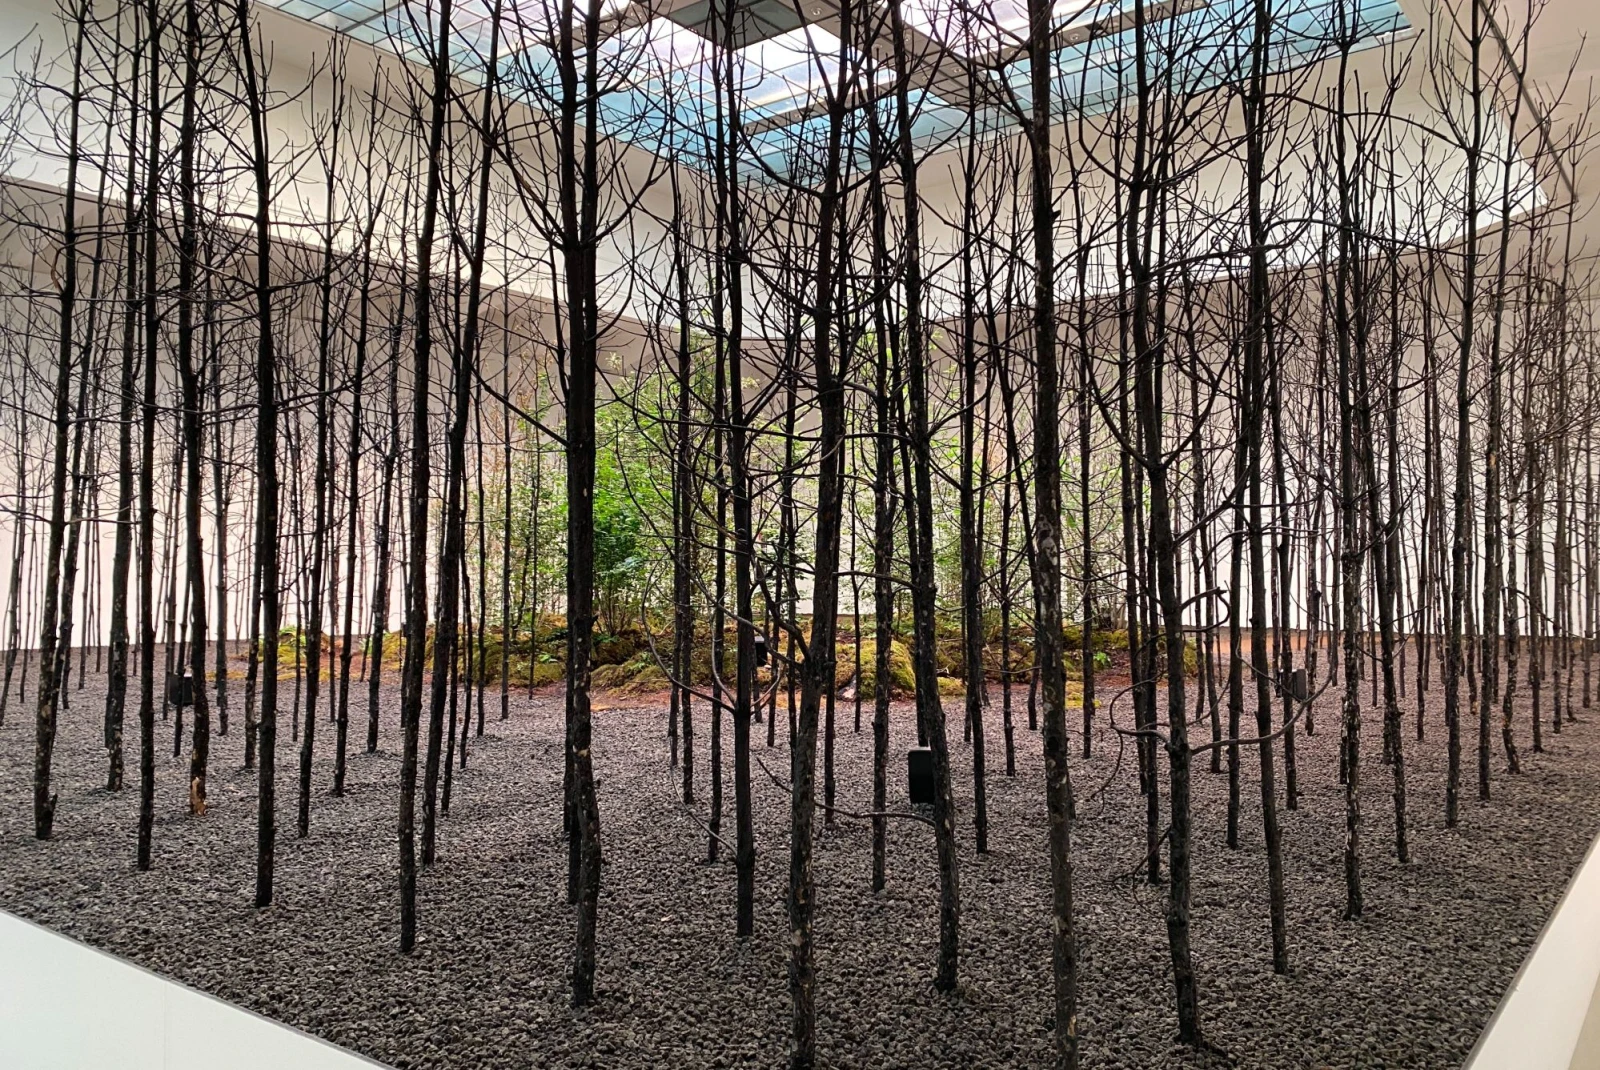 art exhibit of trees growing inside a museum